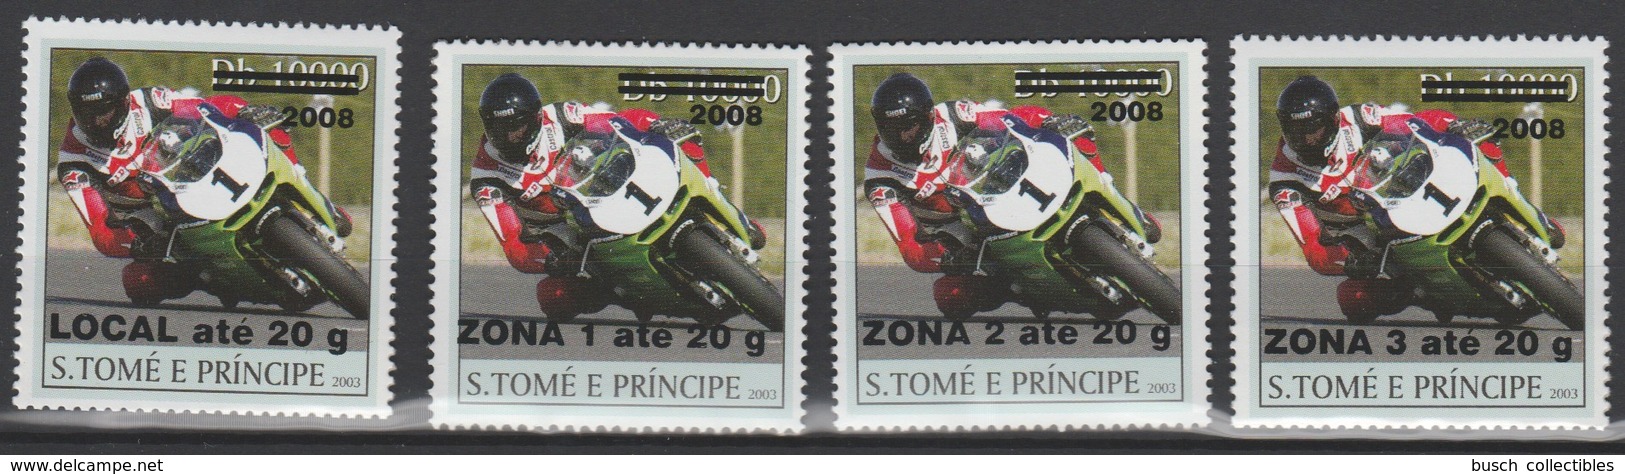 Sao S. Tomé & Principe 2008 / 2009 Mi. 4009-4015 Motorbike Motorrad Moto 4 Val. - Motorräder